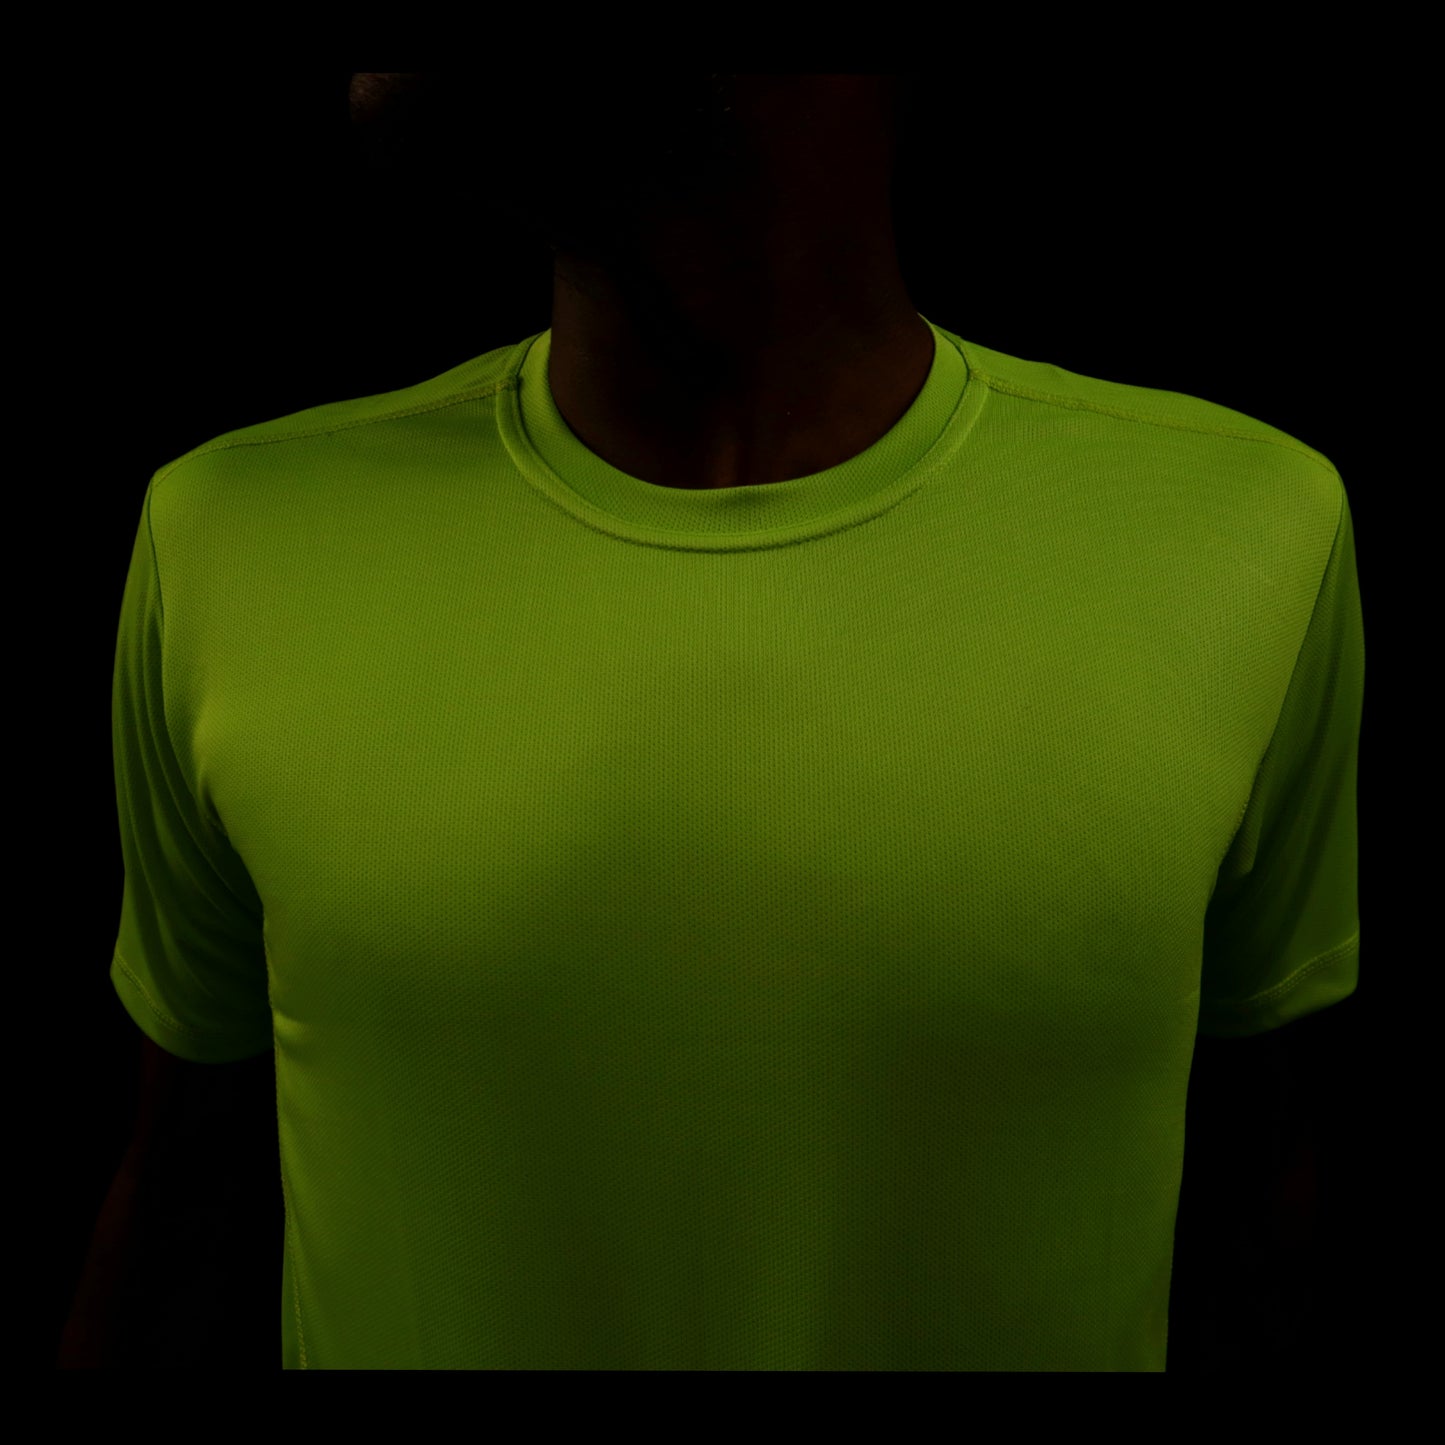 Neon Green Basis Tshirt